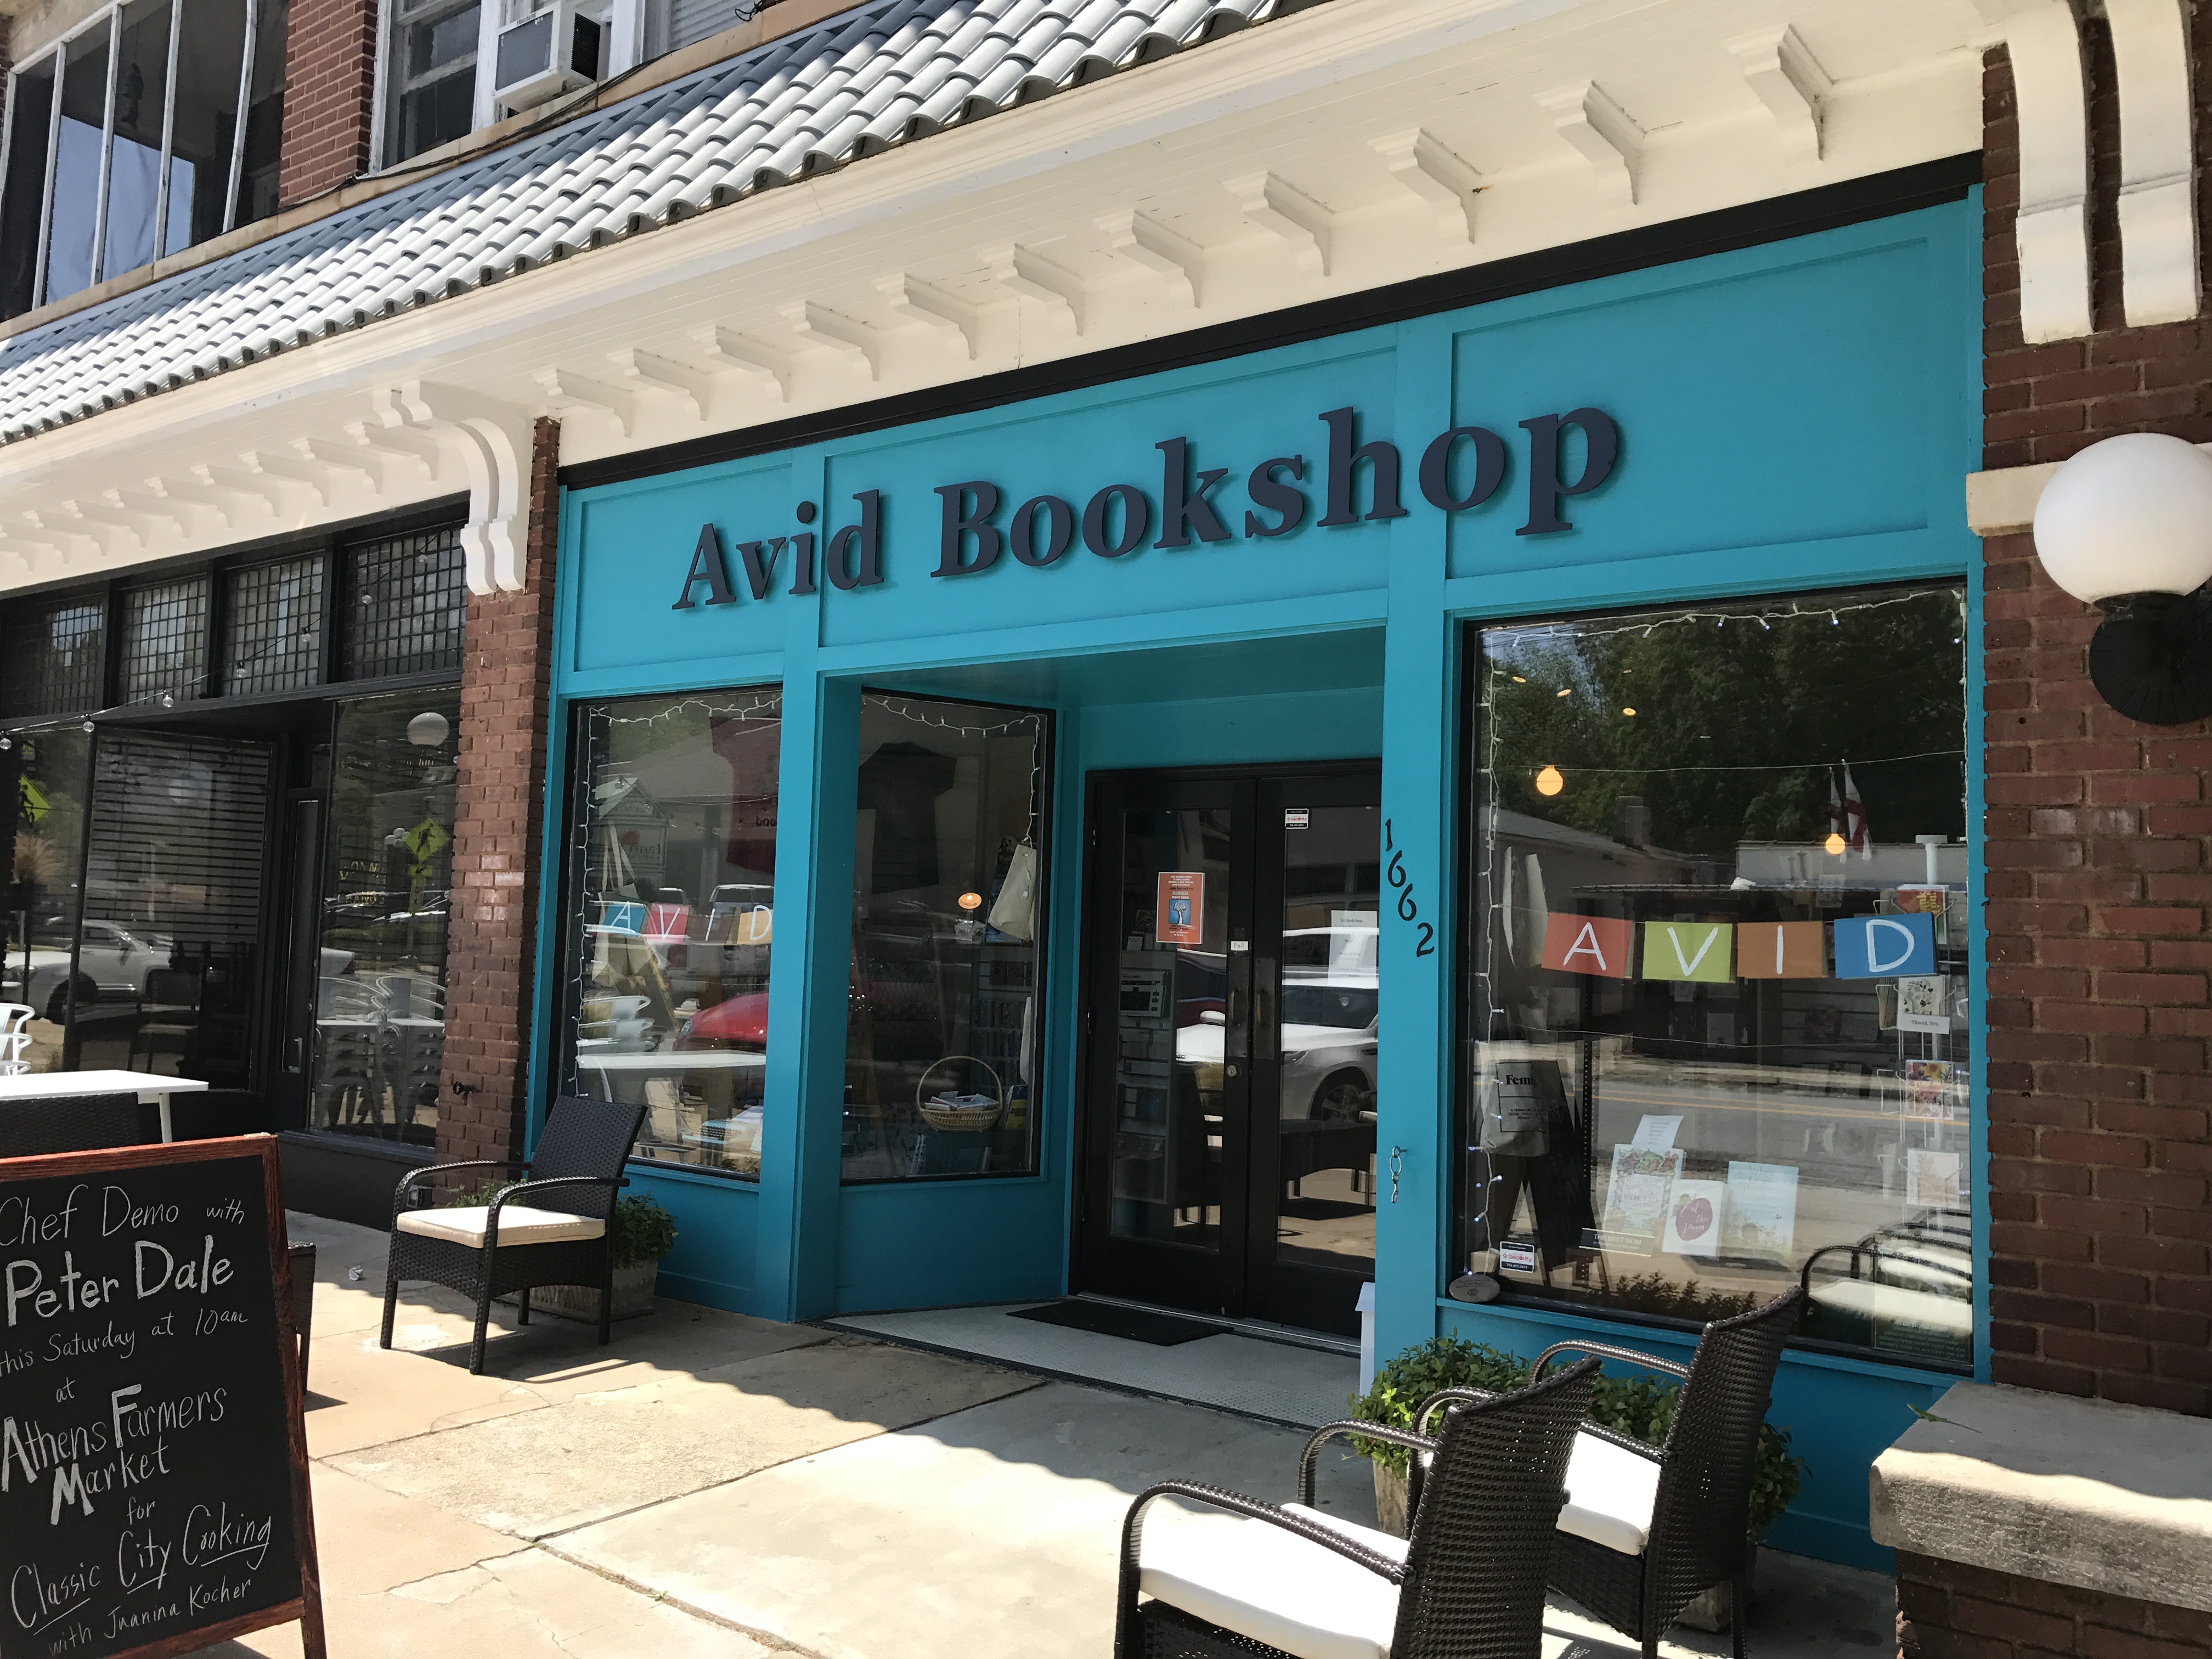 Avid Bookshop on Prince